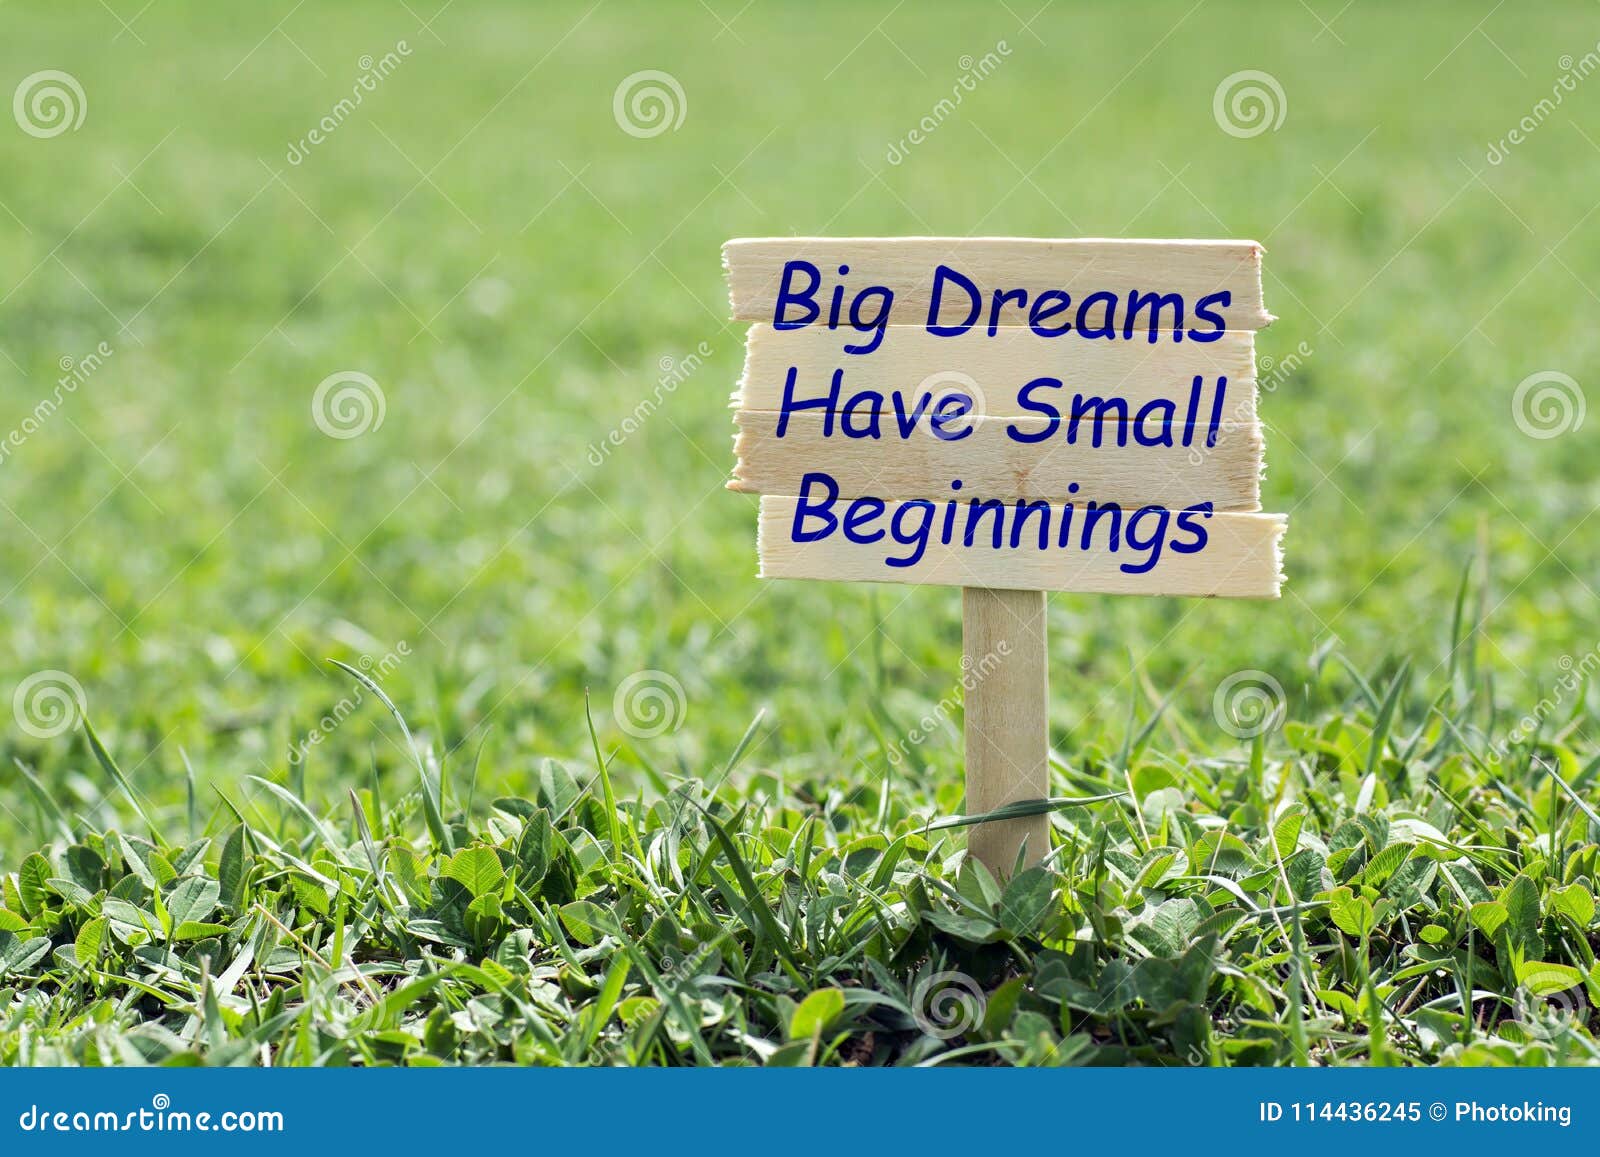 big dreams have small beginnings